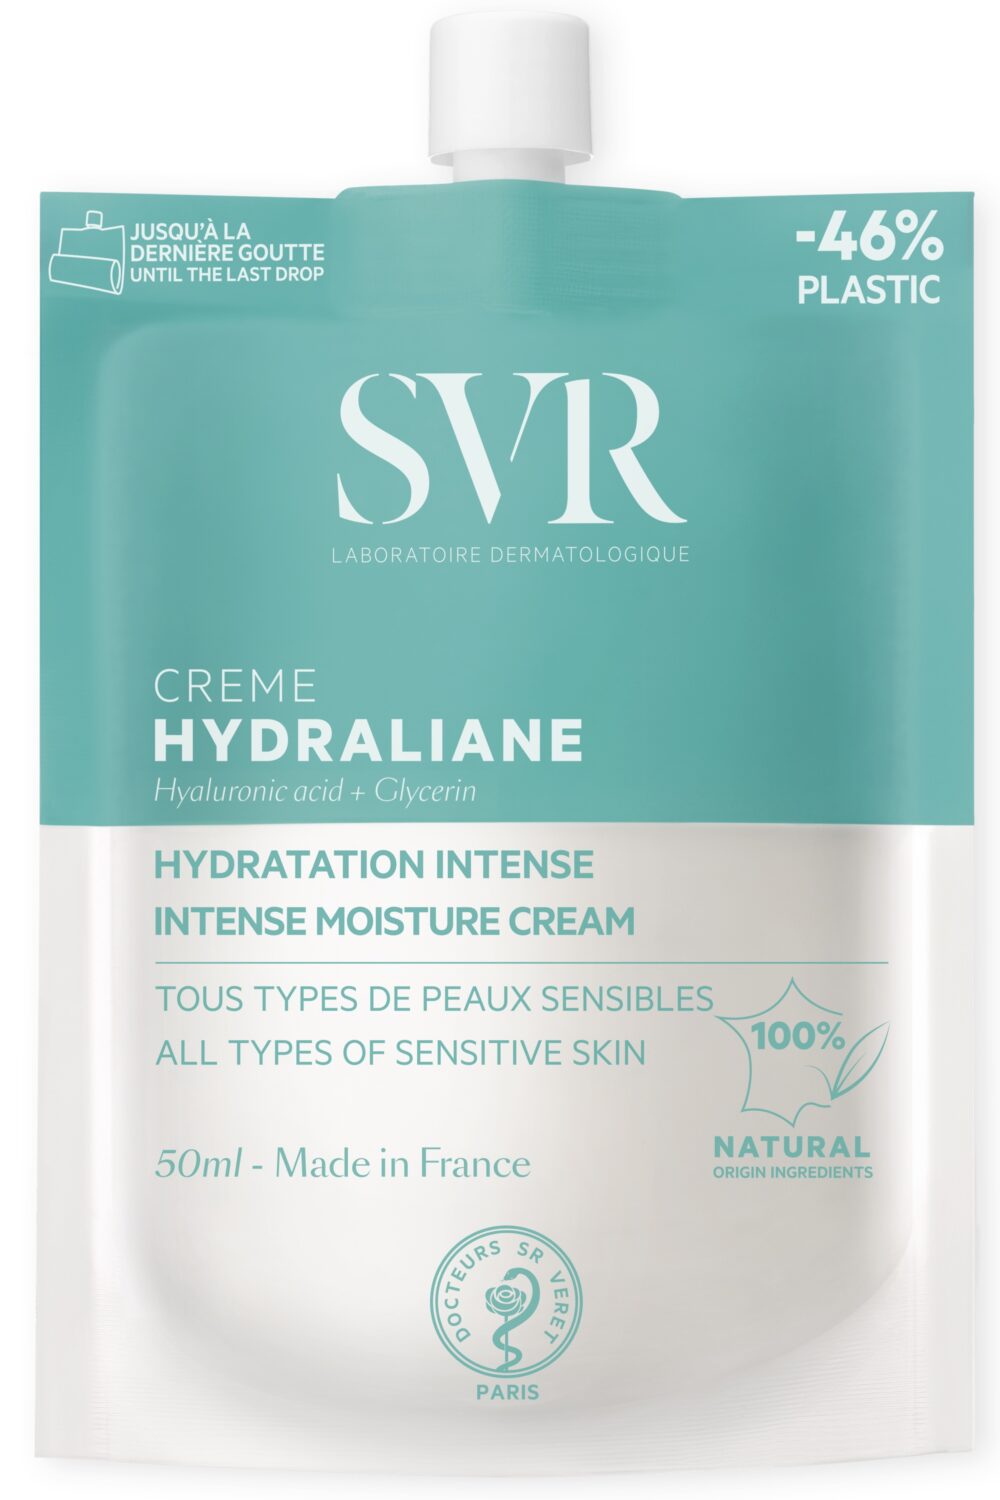 SVR - Crème hydratante Hydraline